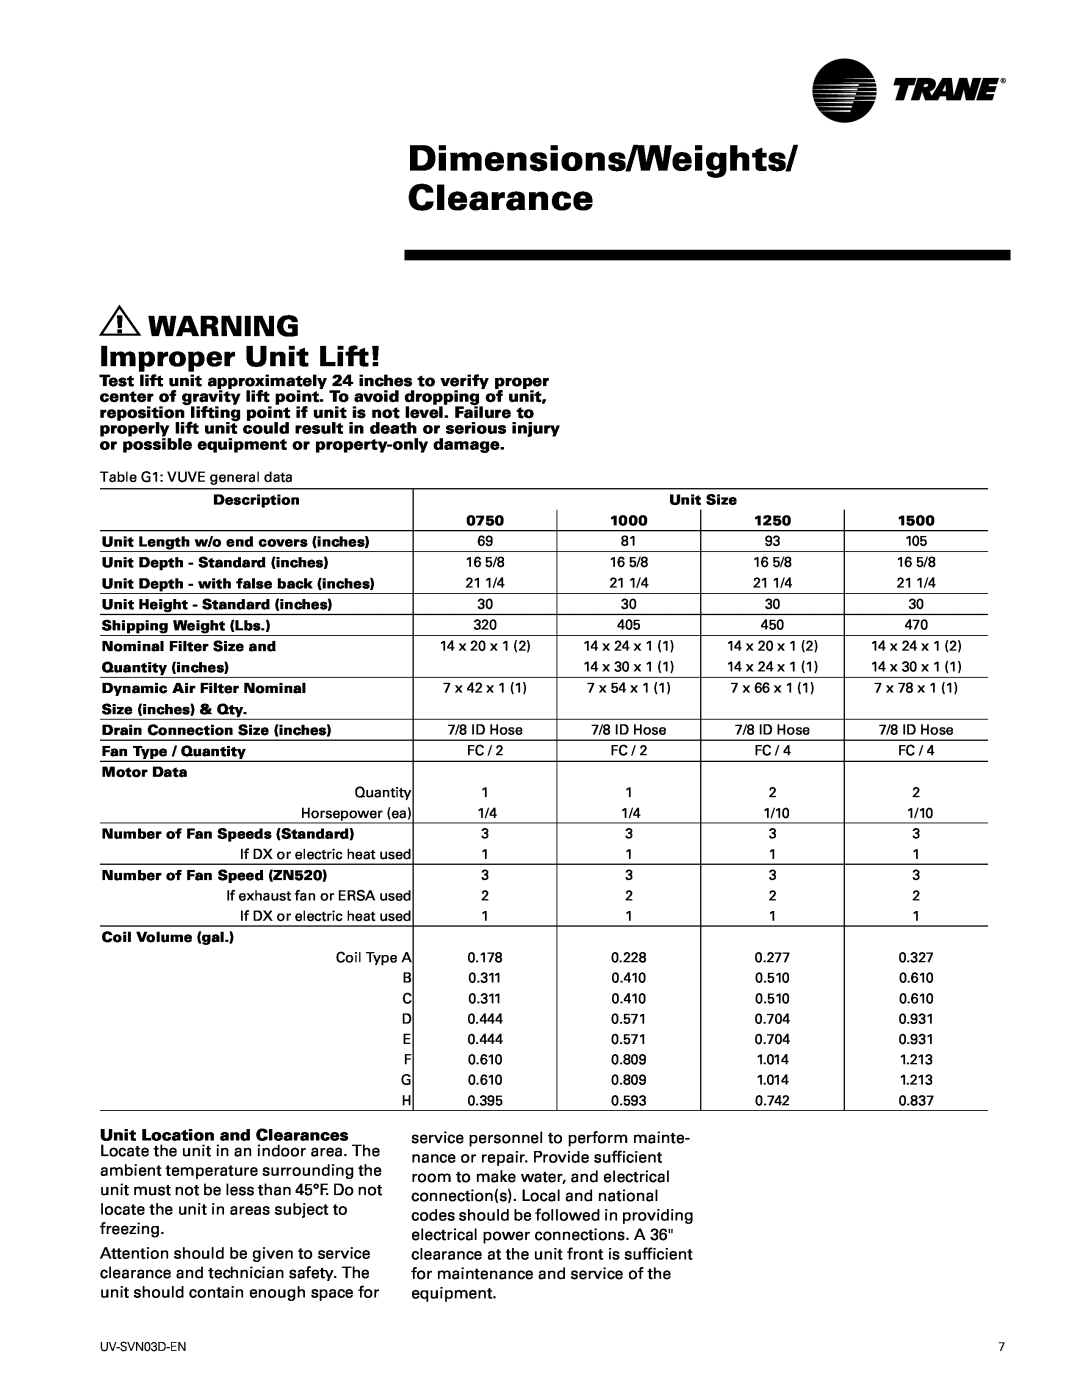 Trane 750 CFM, 1500 CFM manual Dimensions/Weights Clearance, Improper Unit Lift 